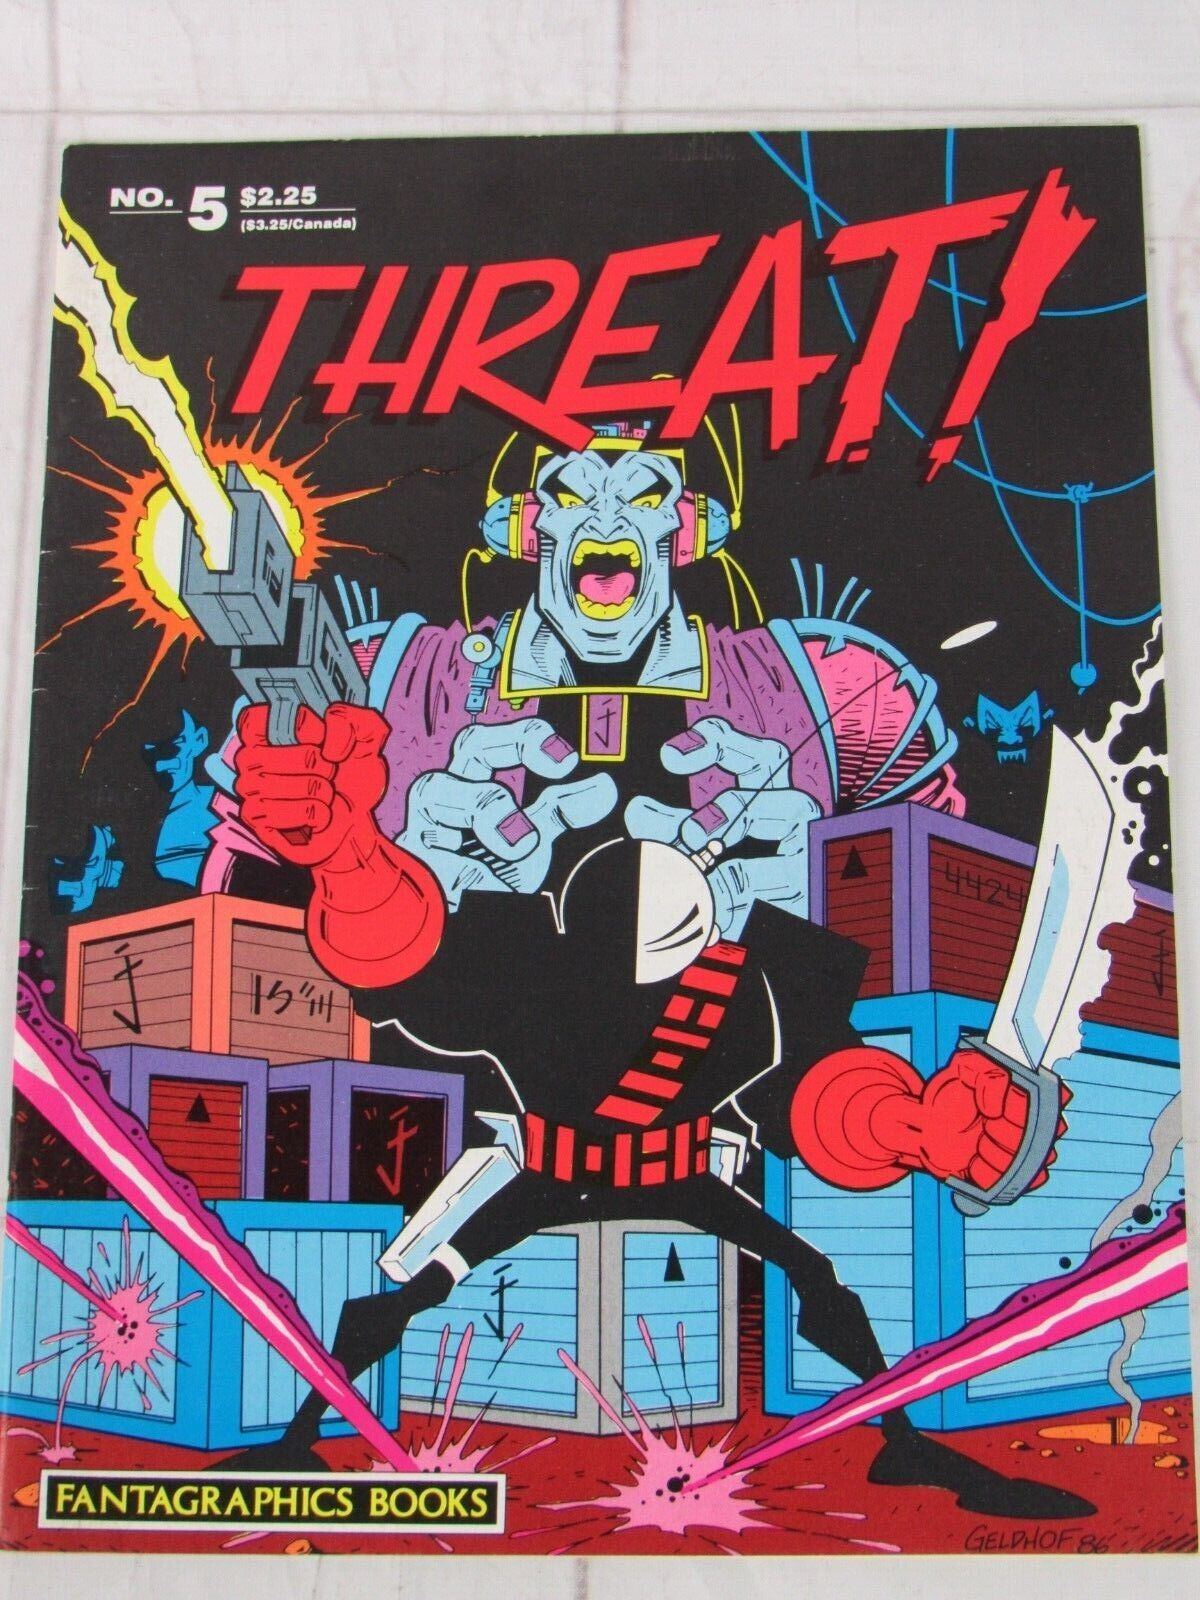 THREAT #5 Oct. 1986 Fantagraphics Books